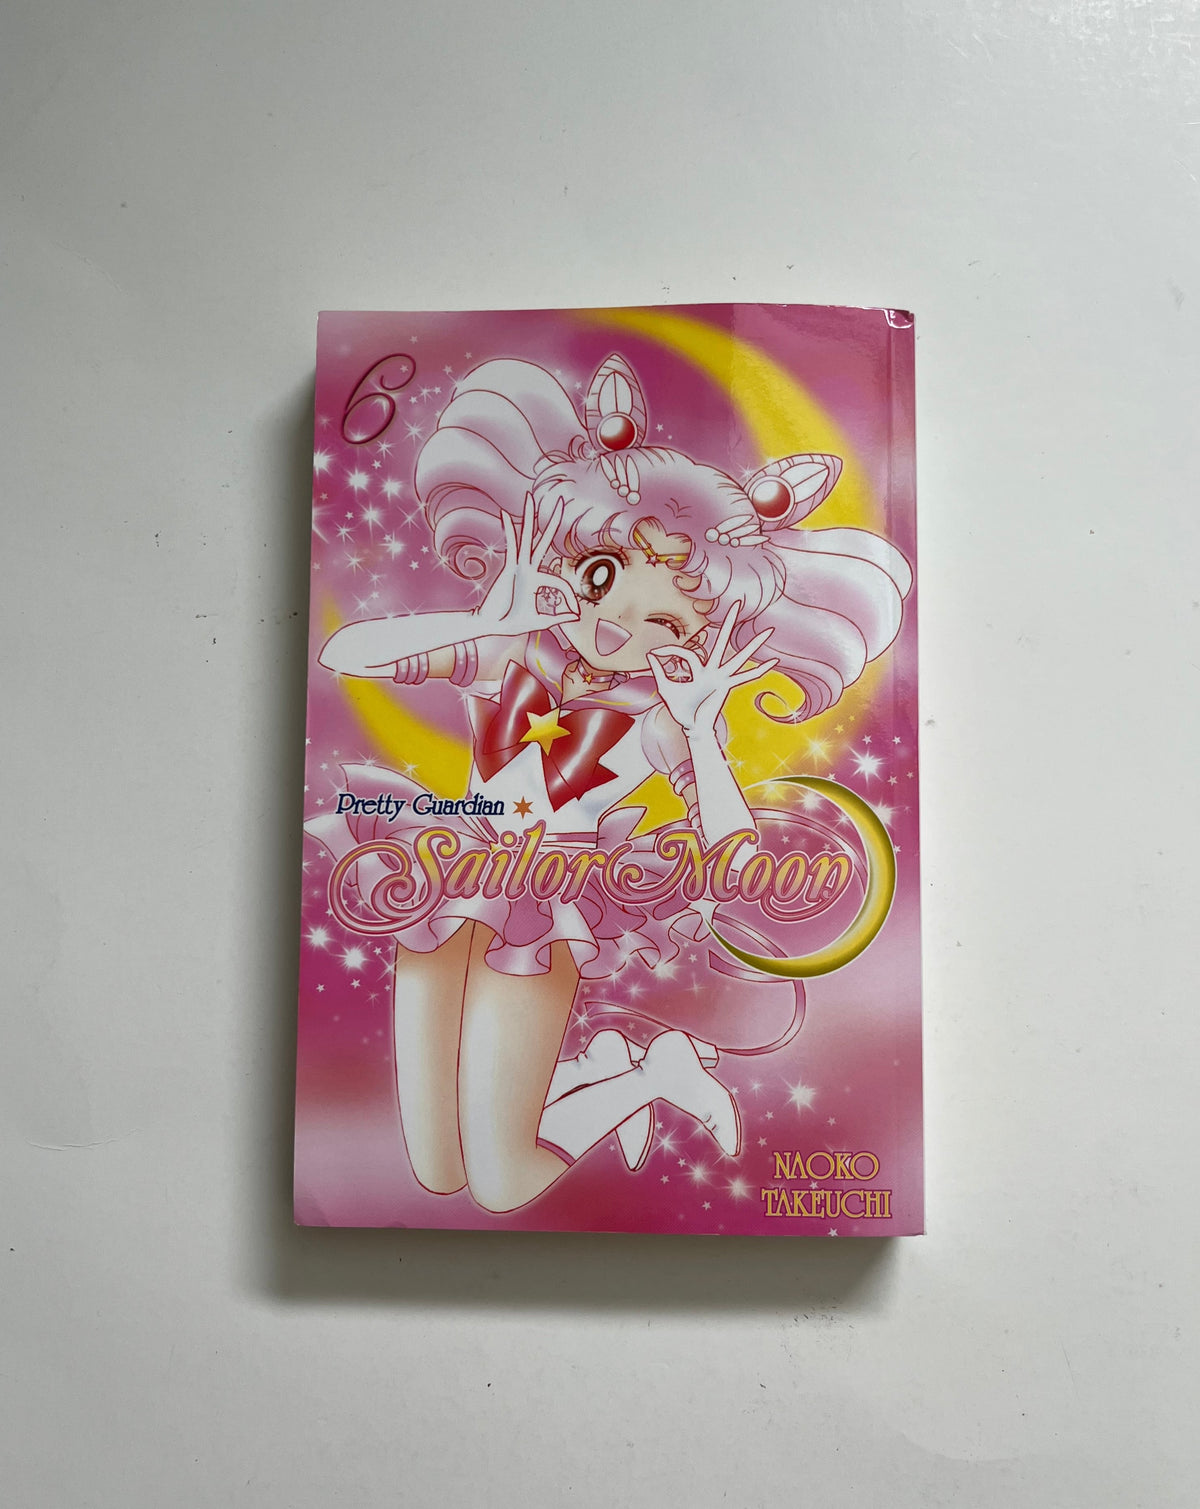 Sailor Moon 6 by Naoko Takeuchi